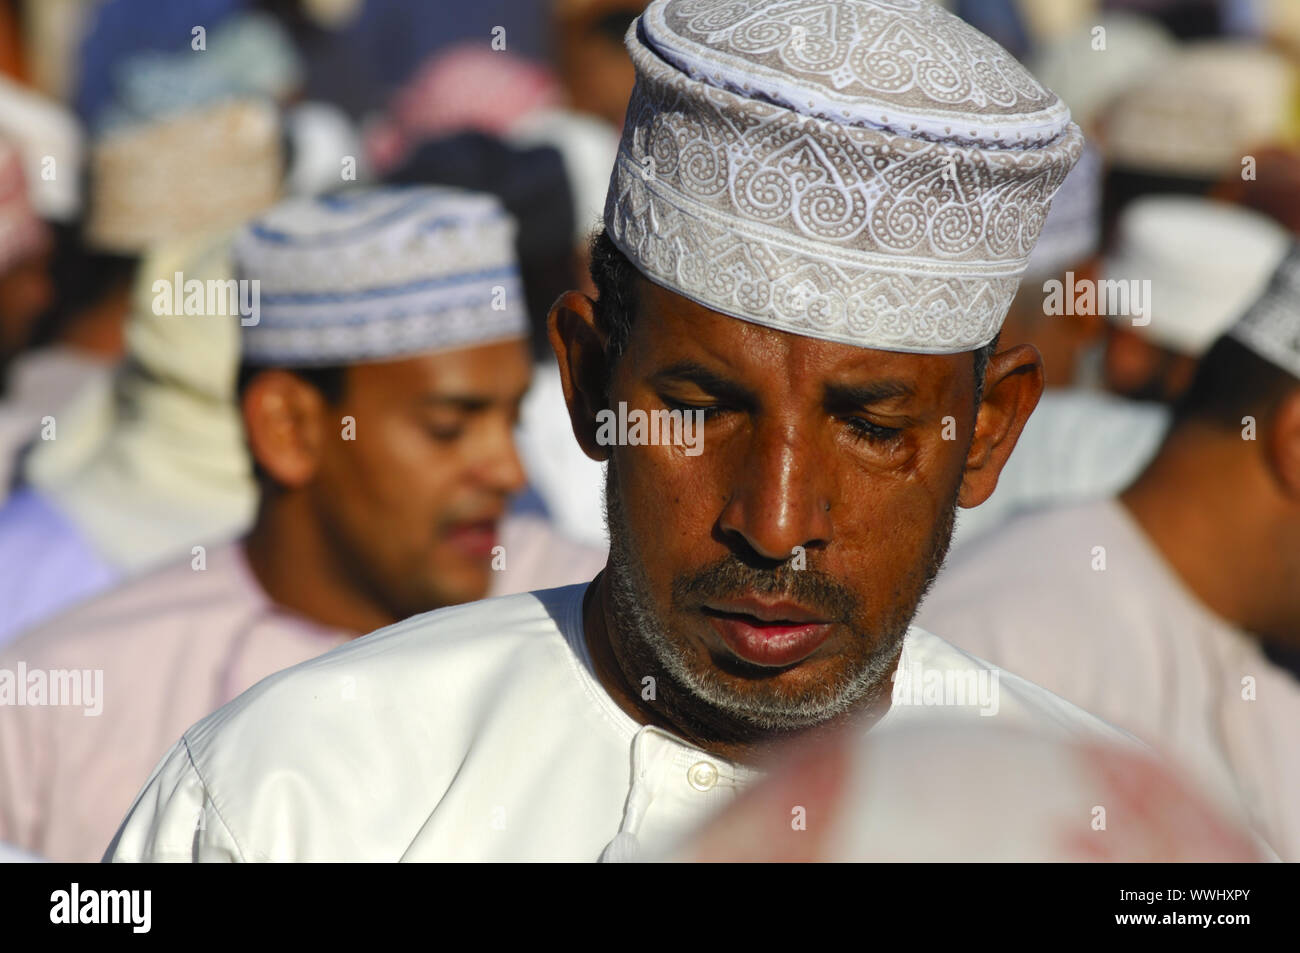 Man from Oman in national costume Dishdasha Stock Photo